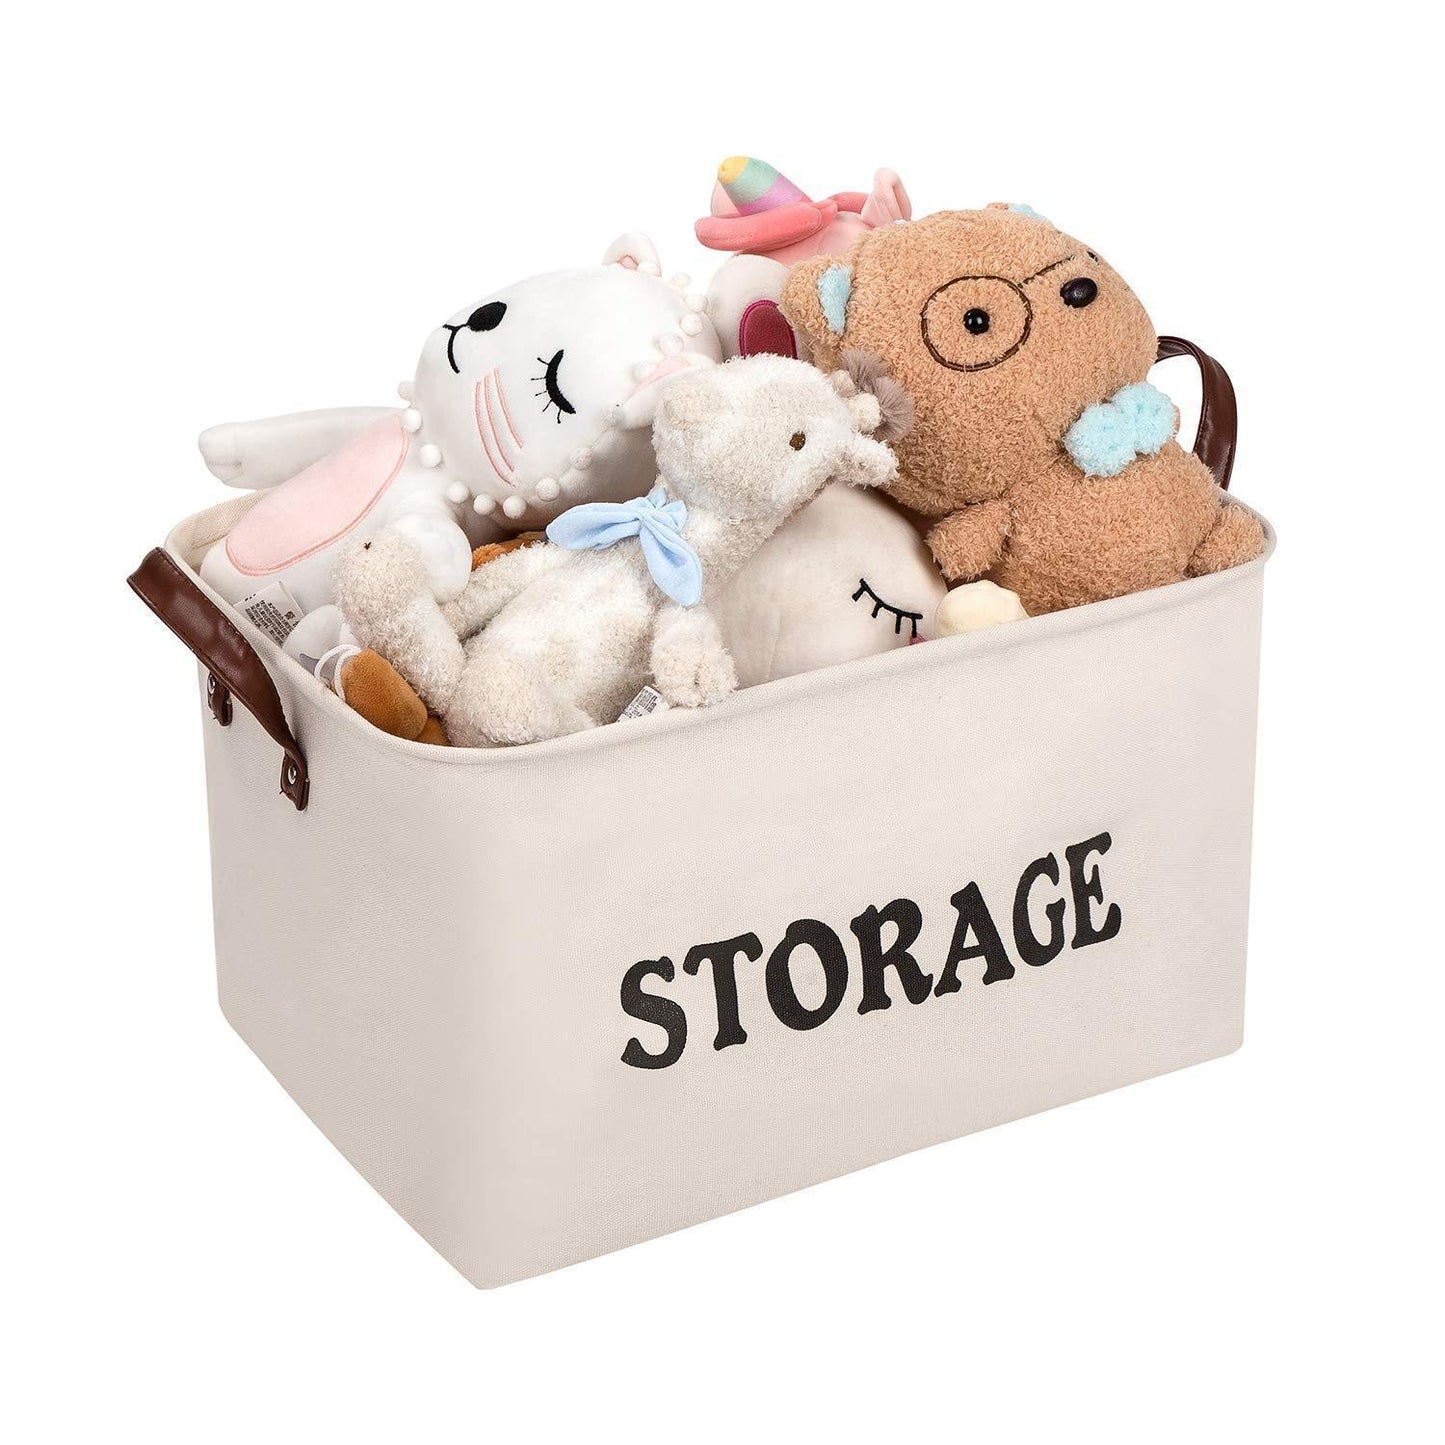 Cheap shinytime storage baskets bins large organizer toy laundry storage basket for kids pets home living room closet beige 2pcs